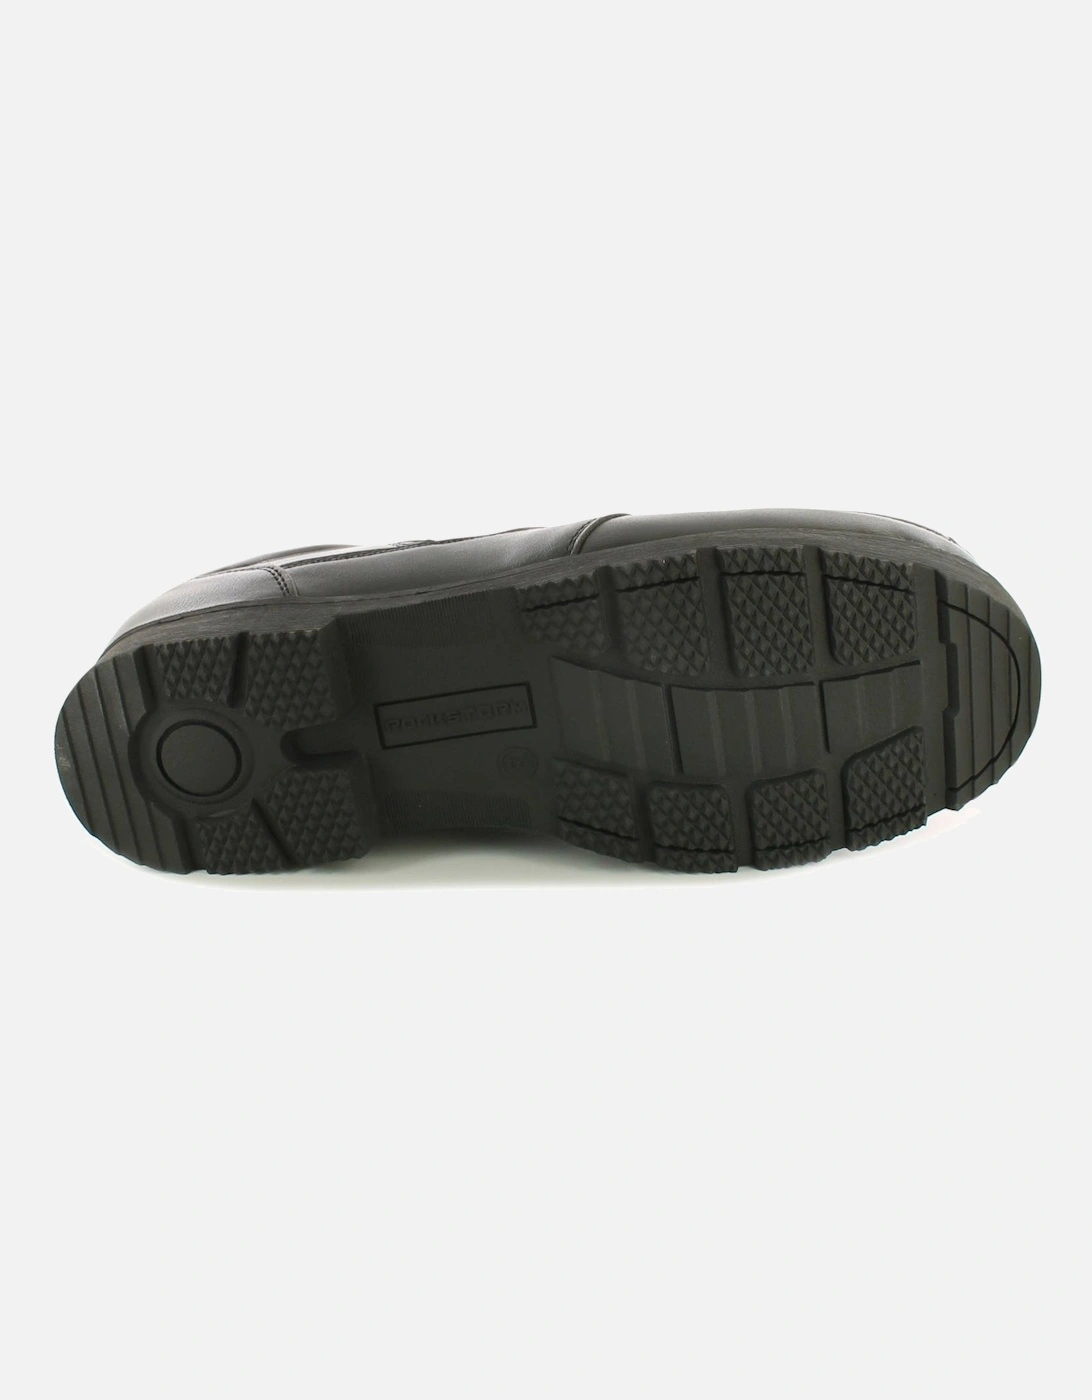 Mens Shoes Work School Hunter 3 Lace Up black UK Size